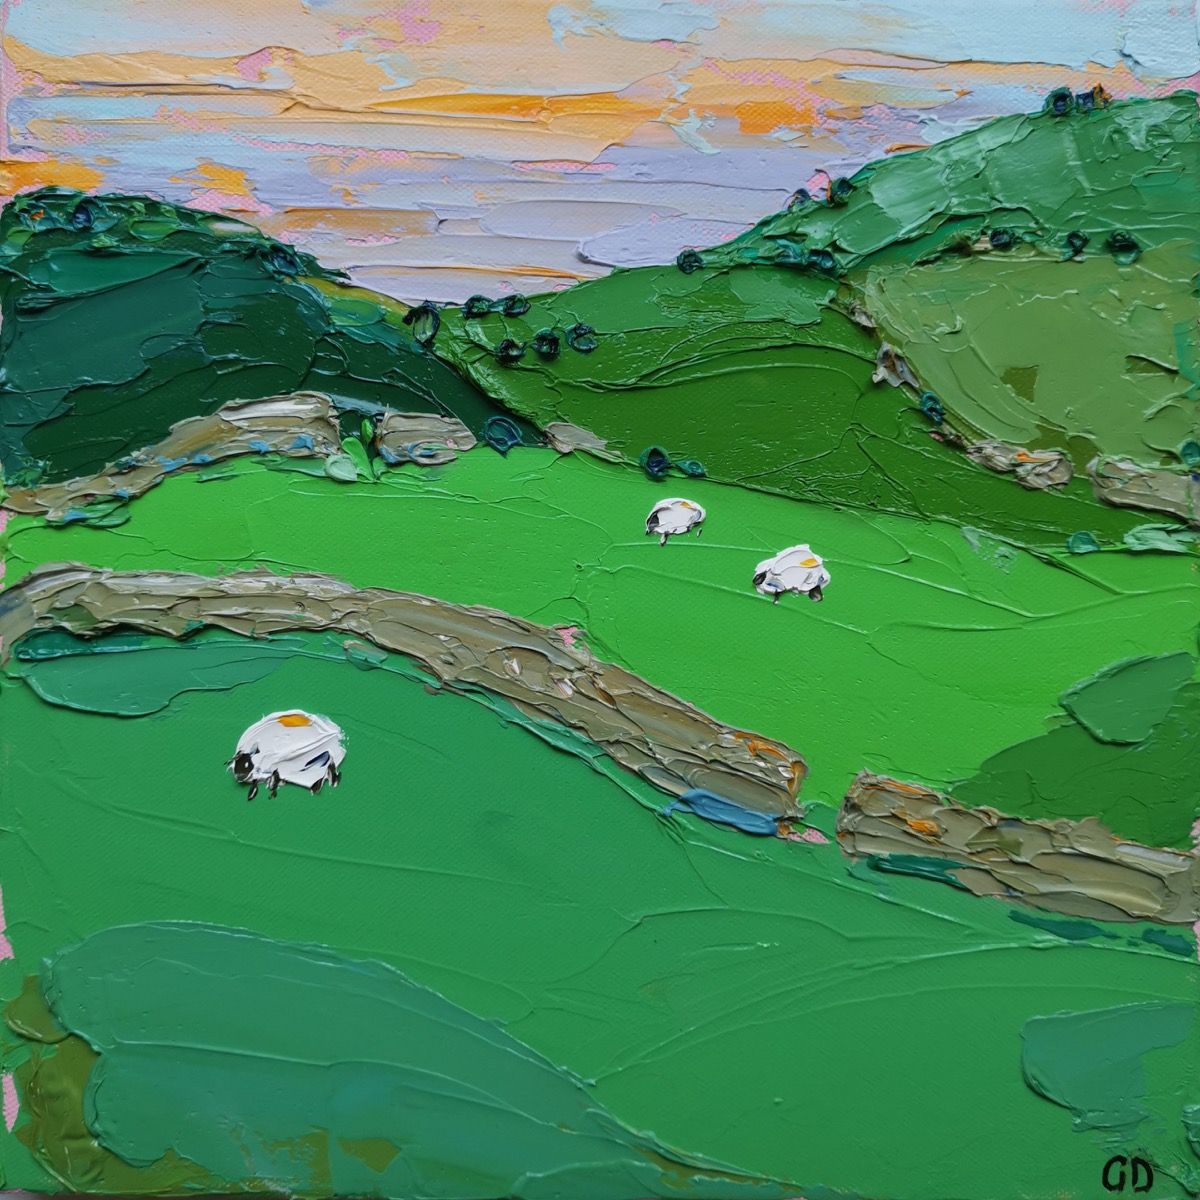 Shepherds Delight by Georgie Dowling